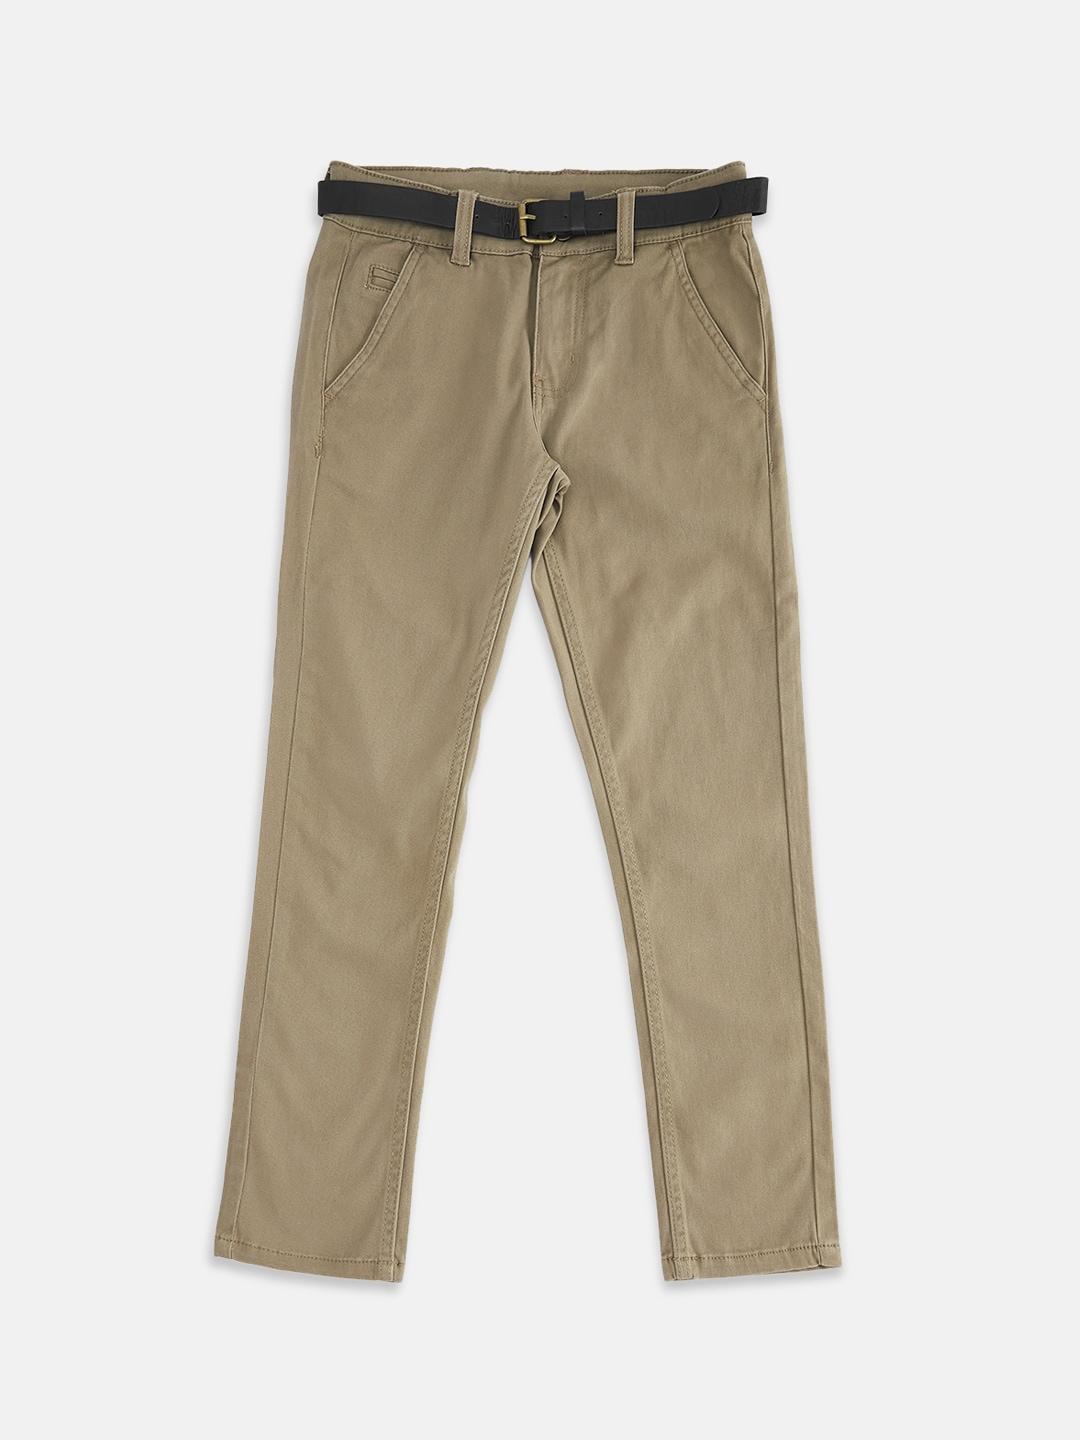 pantaloons-junior-boys-tan-solid-cotton-regular-fit-trousers